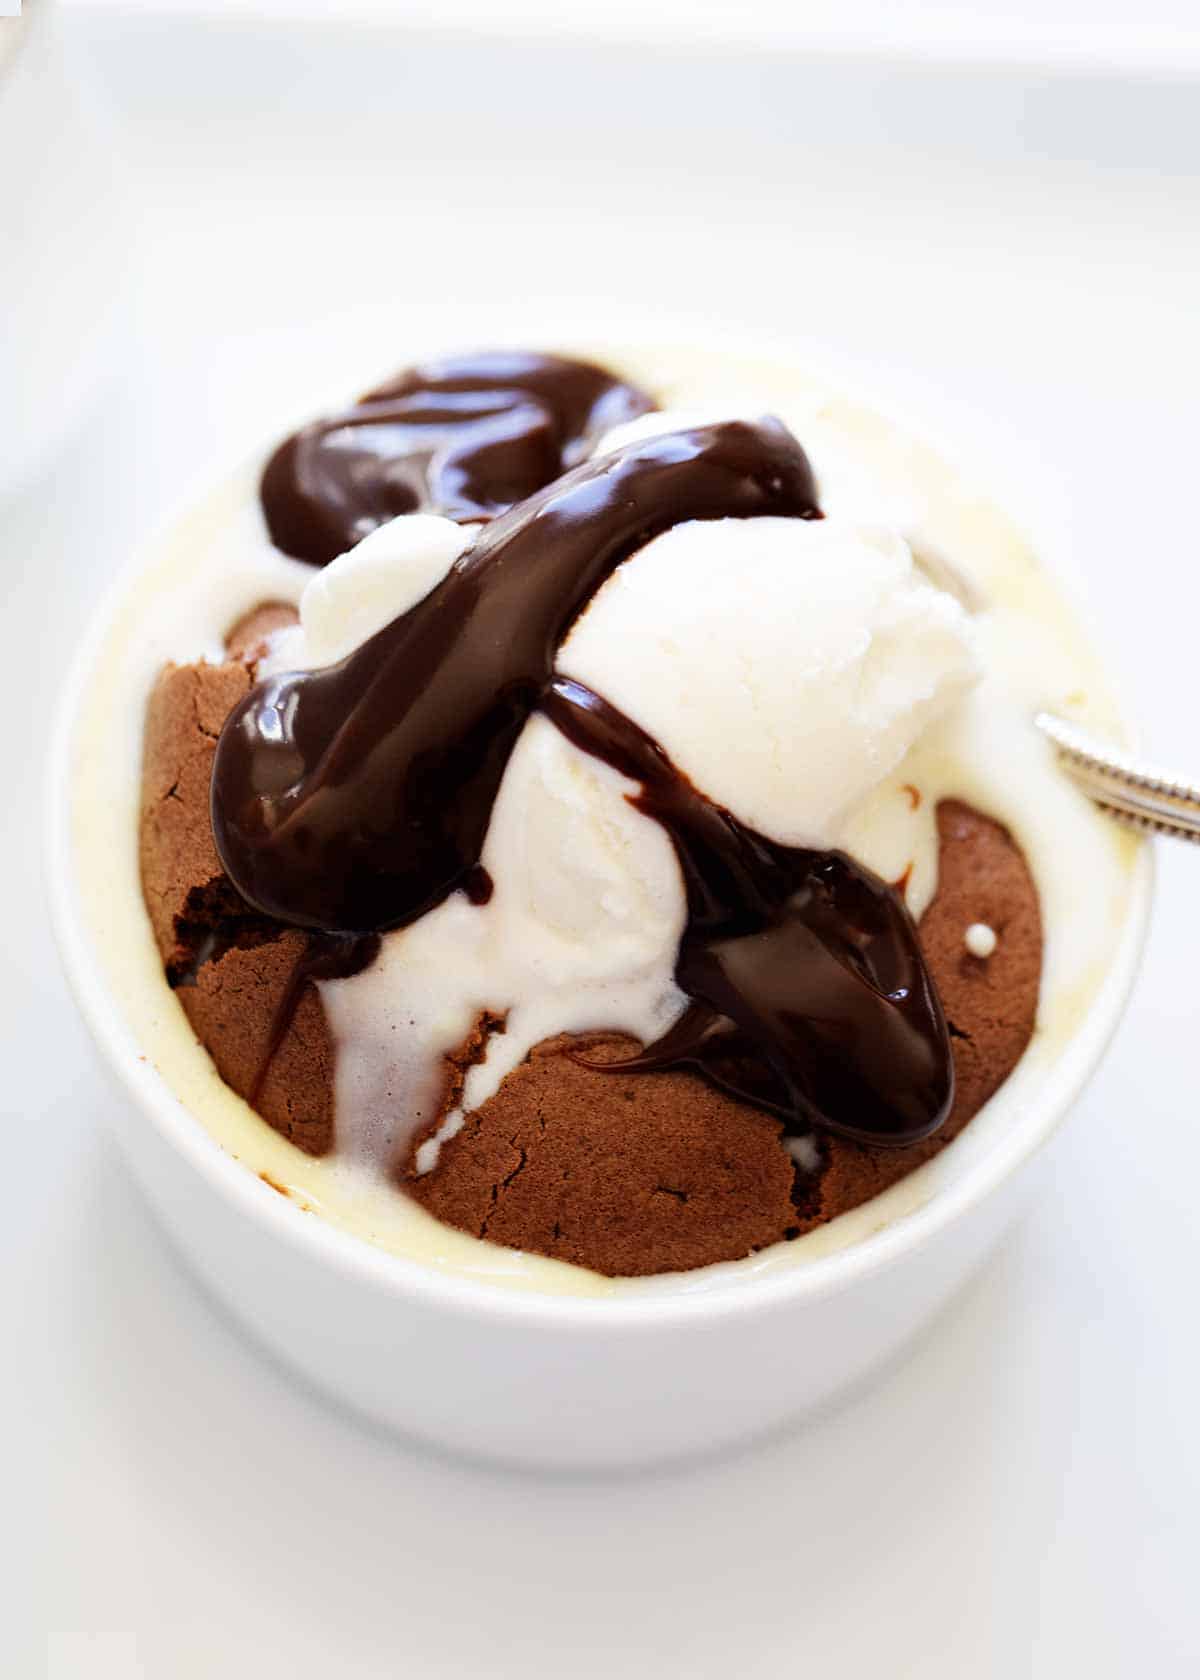 Chocolate souffle ramekin with vanilla ice cream and hot fudge sauce.